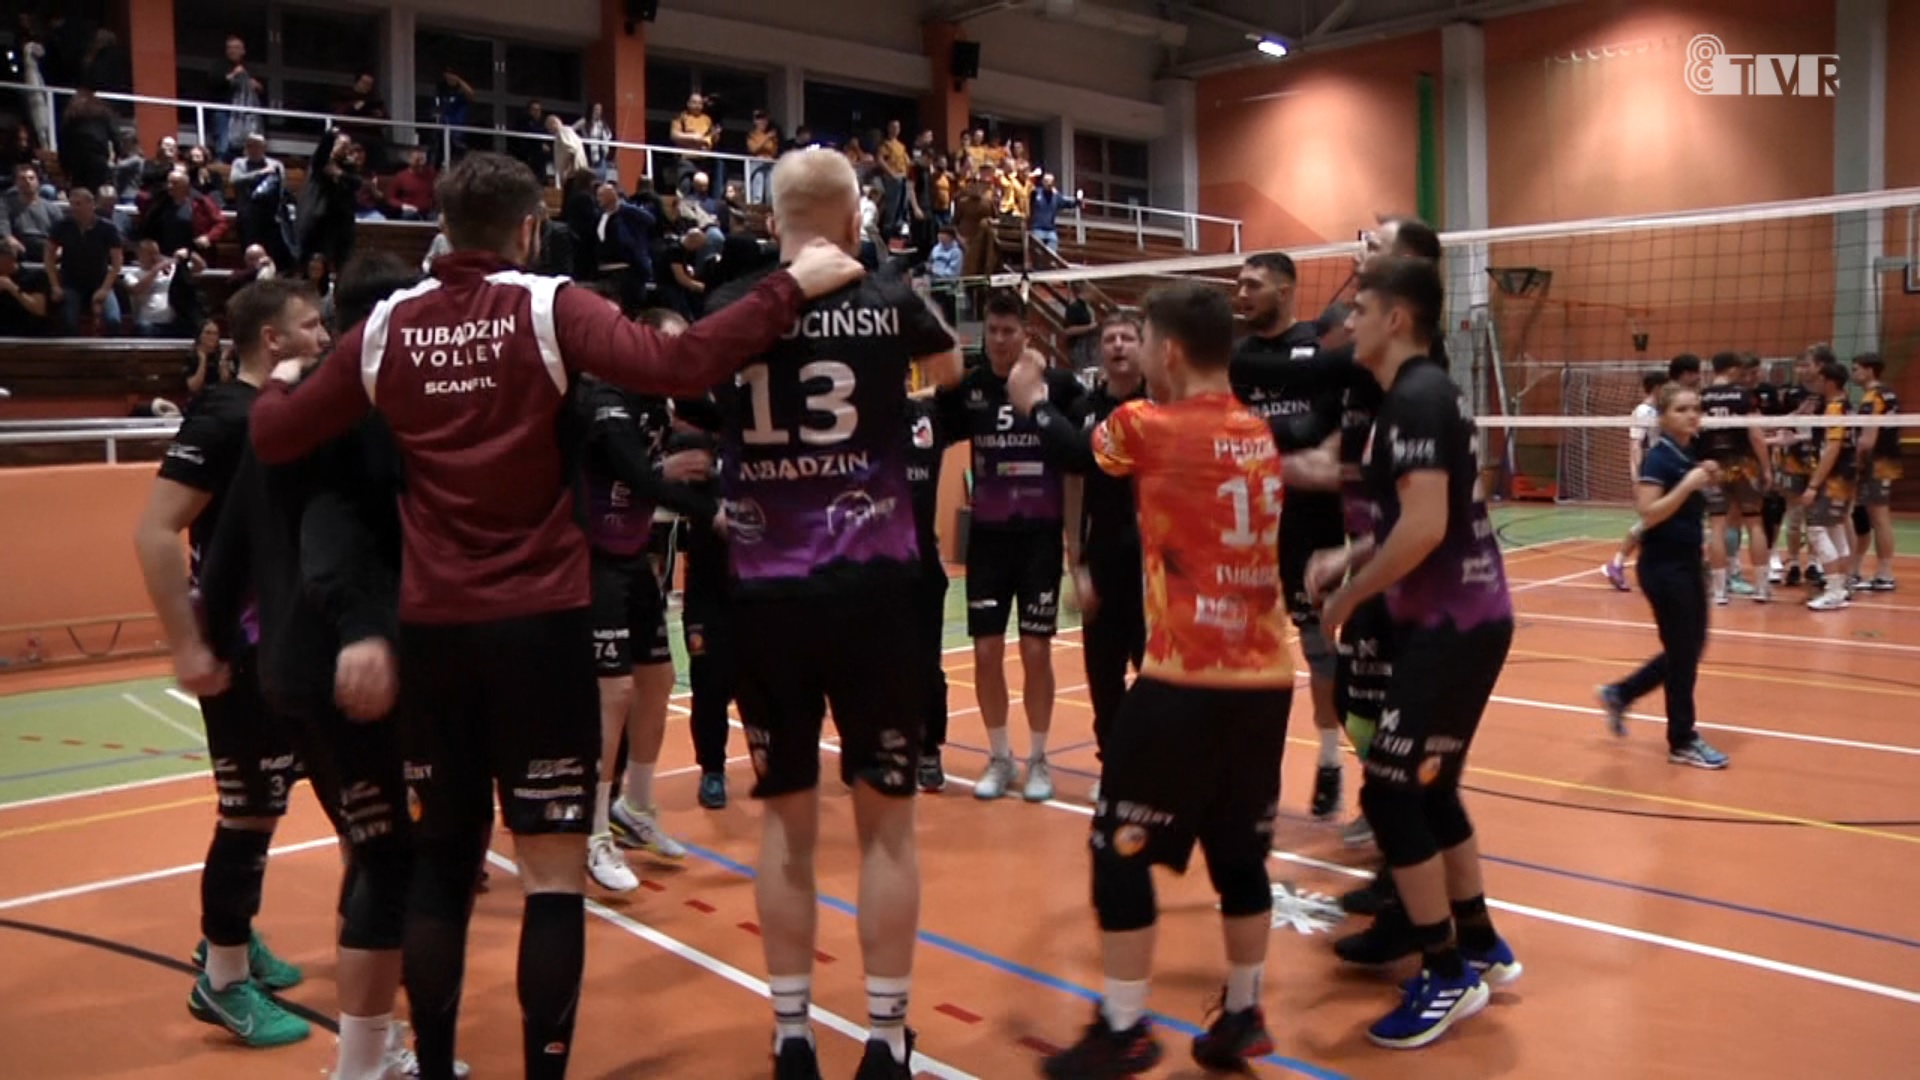 Tubądzin Volley MOSiR Sieradz vs. Trefl II Gdańsk